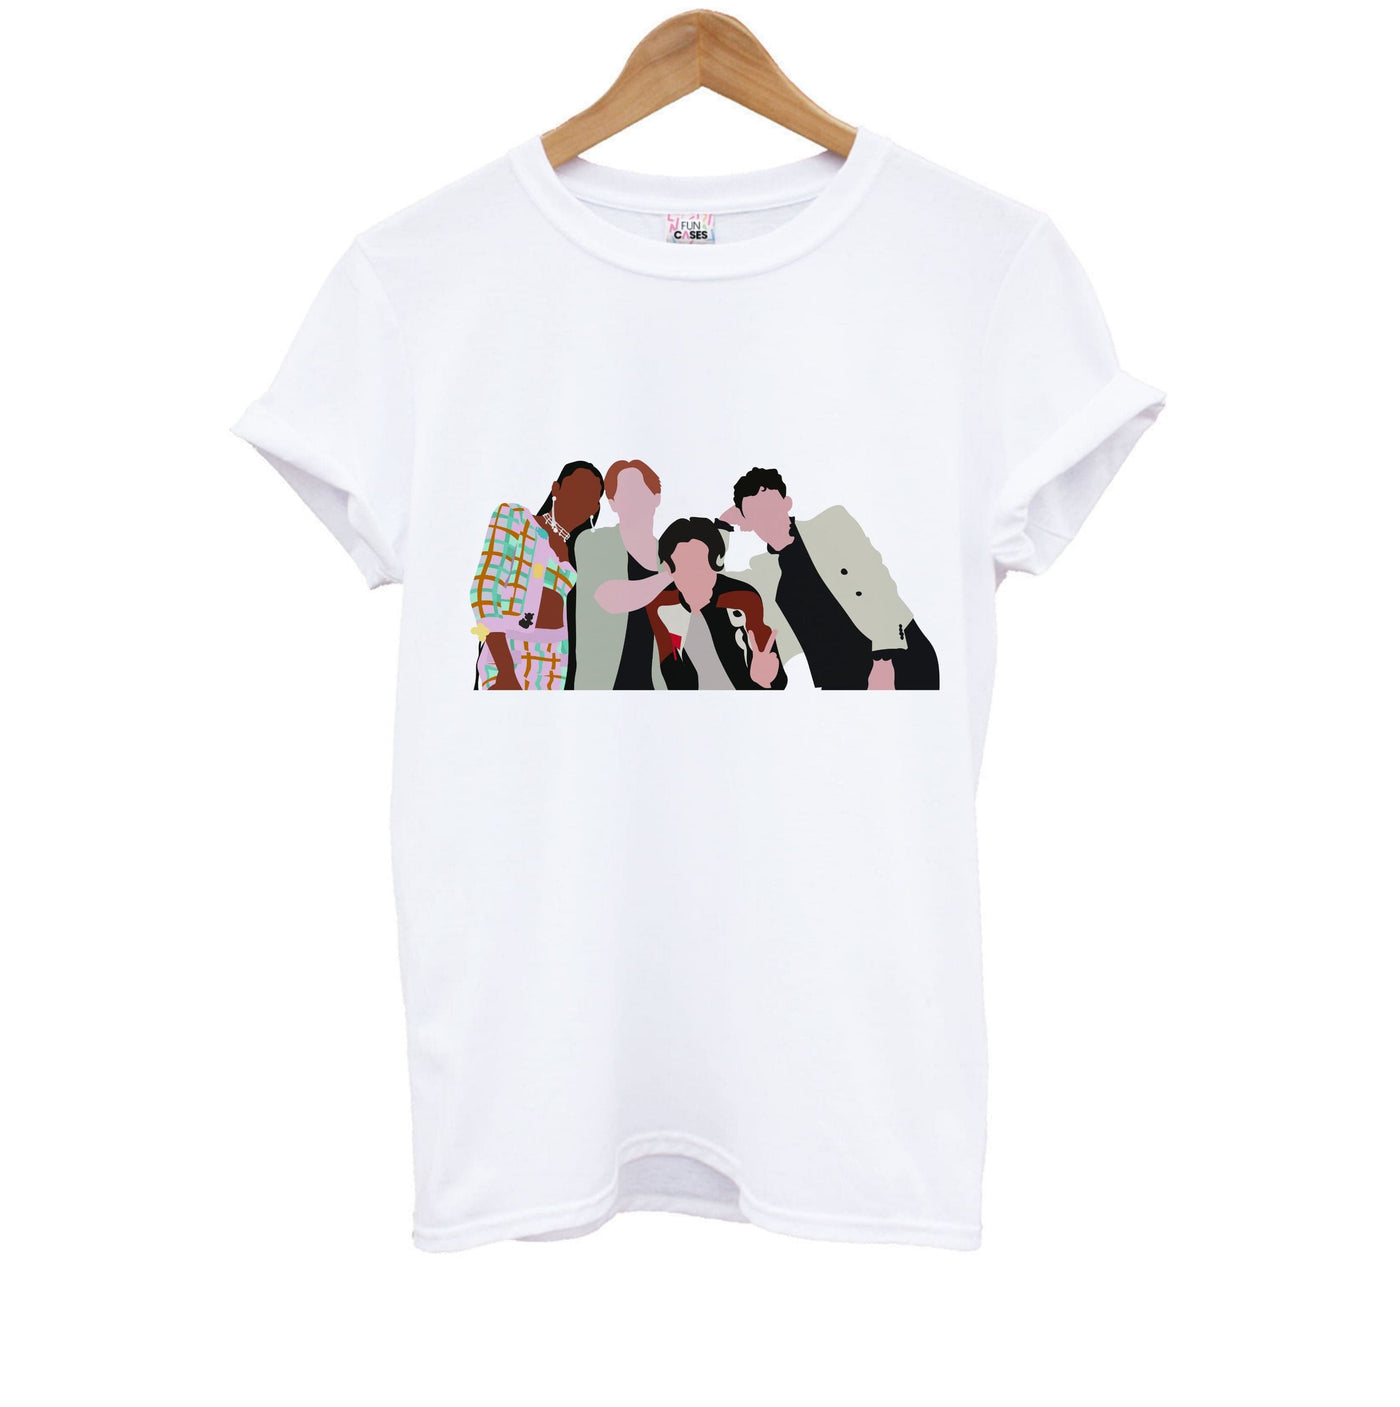 The Crew - Heartstopper Kids T-Shirt